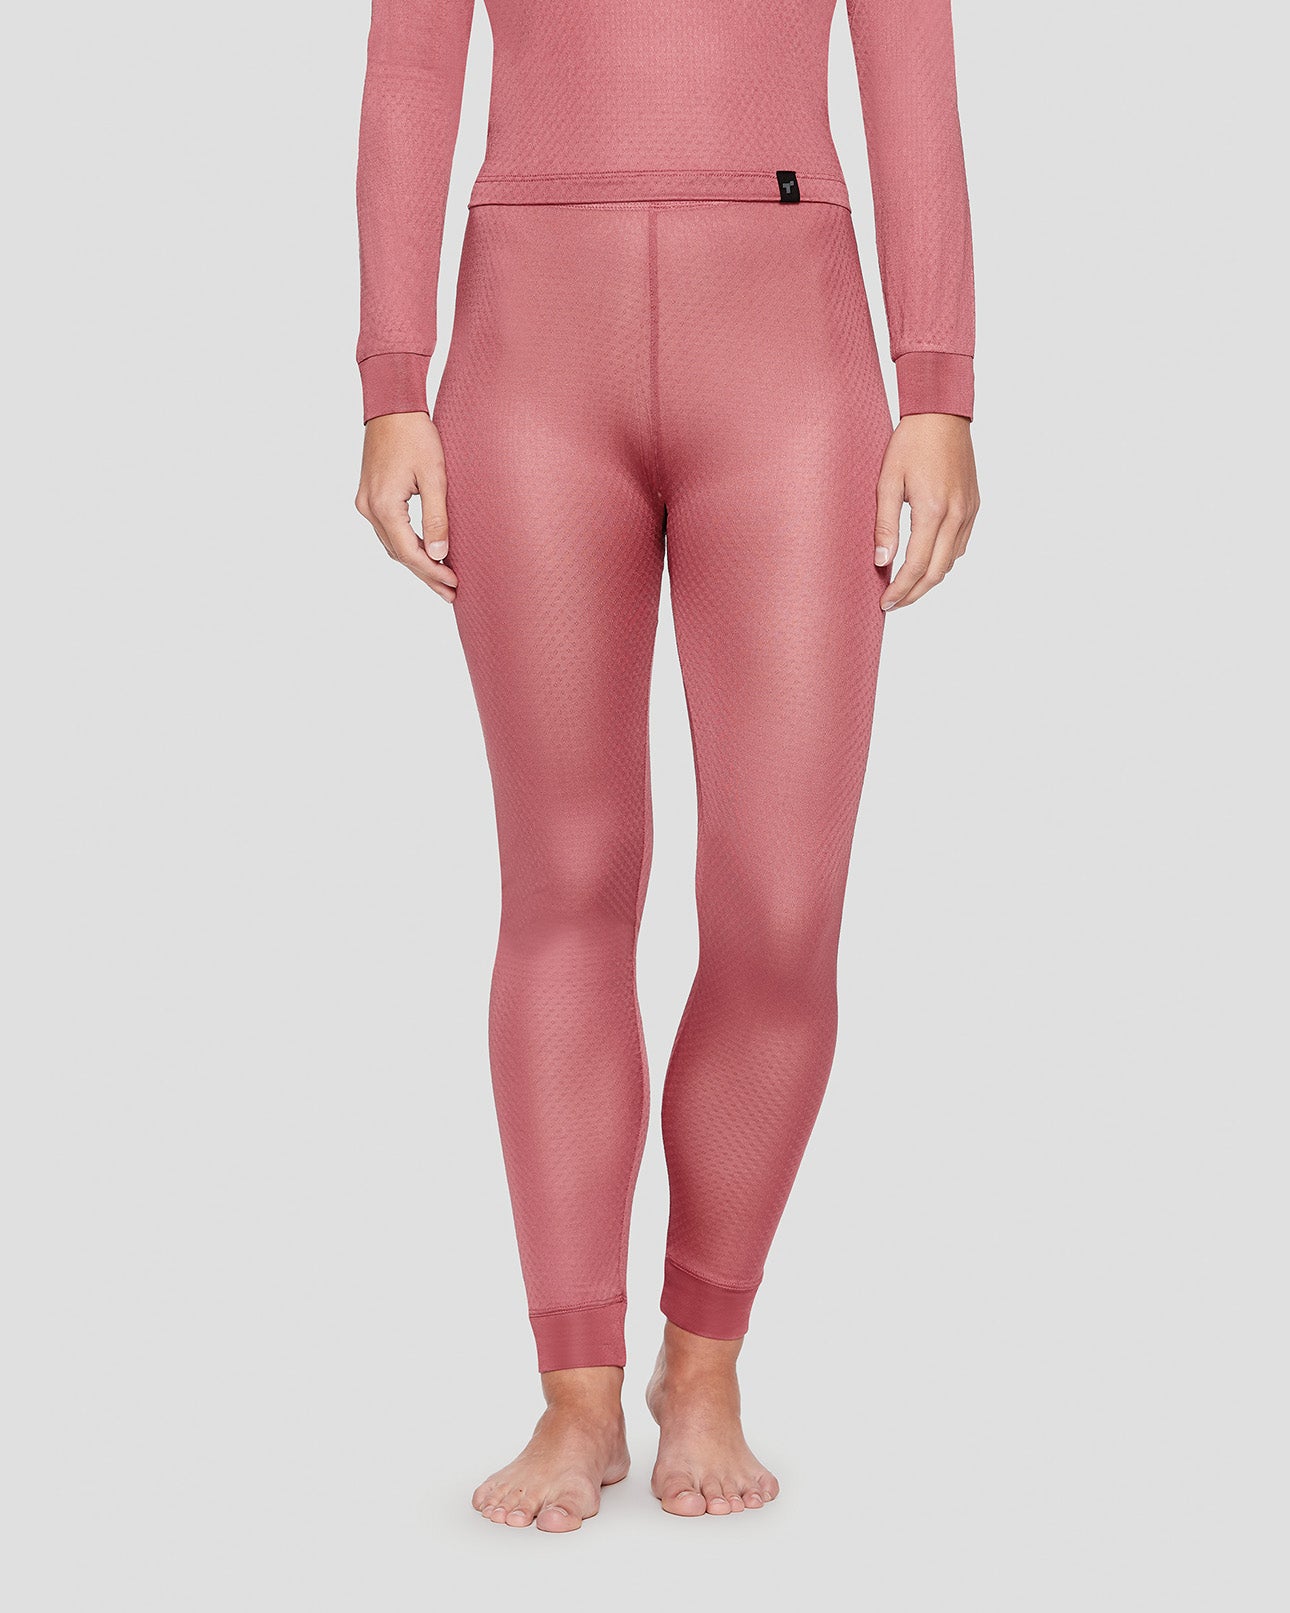 STRATEGIC TOP - Black & Pink - Women's Silk thermal baselayer